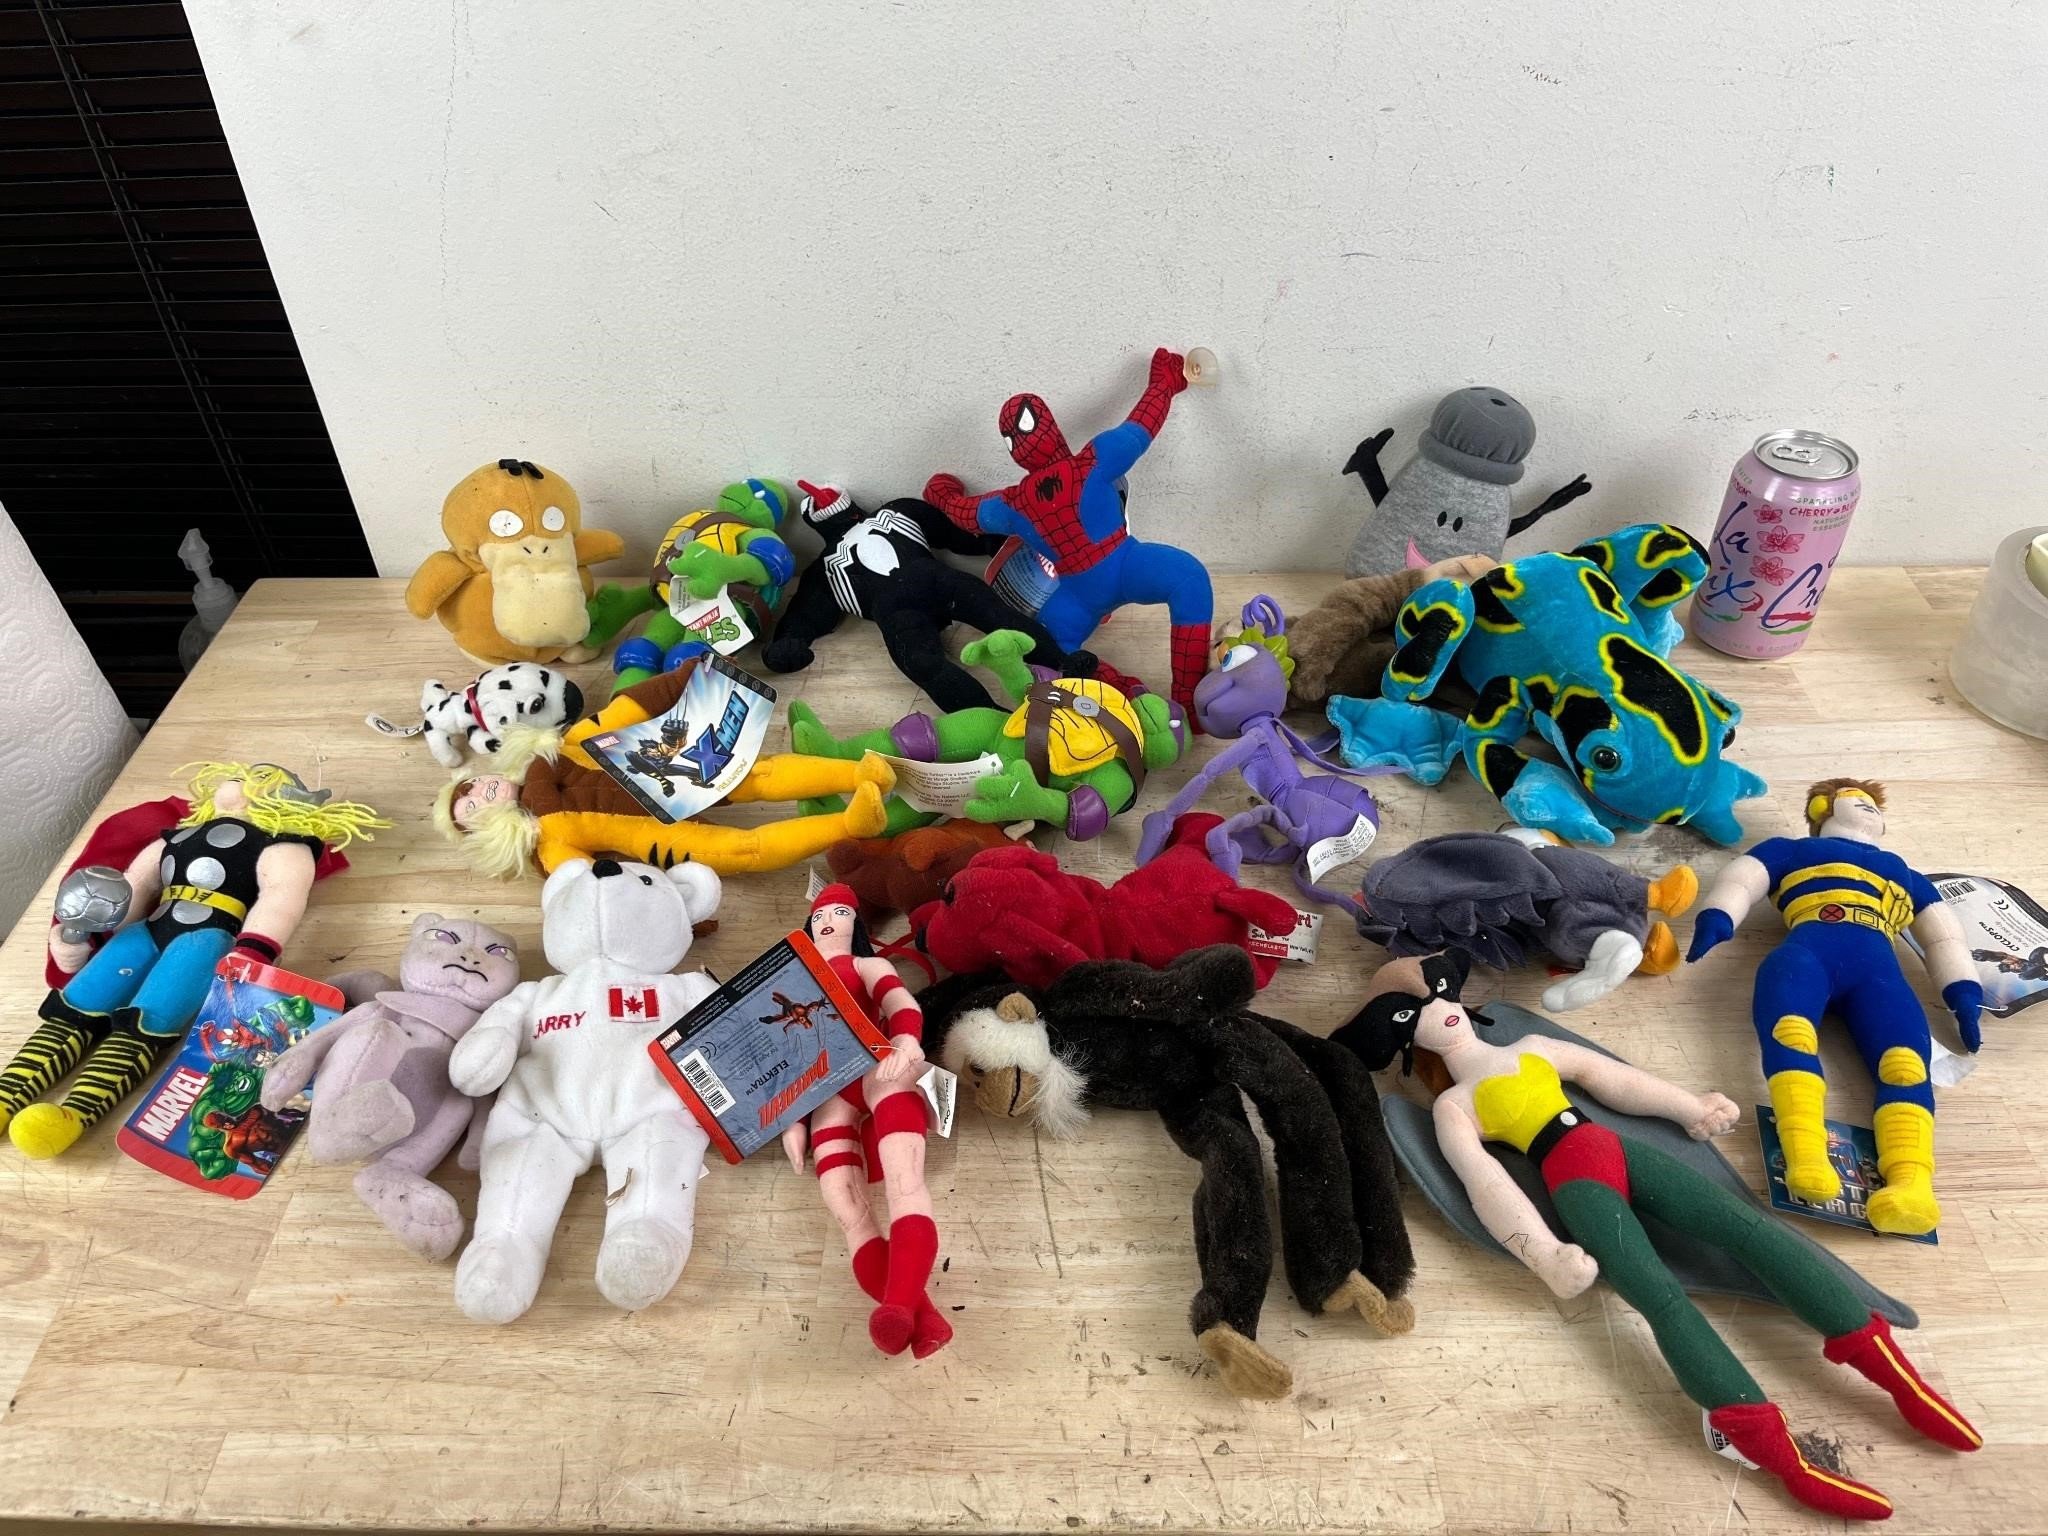 Stuffed animals lot with Pokémon and marvel